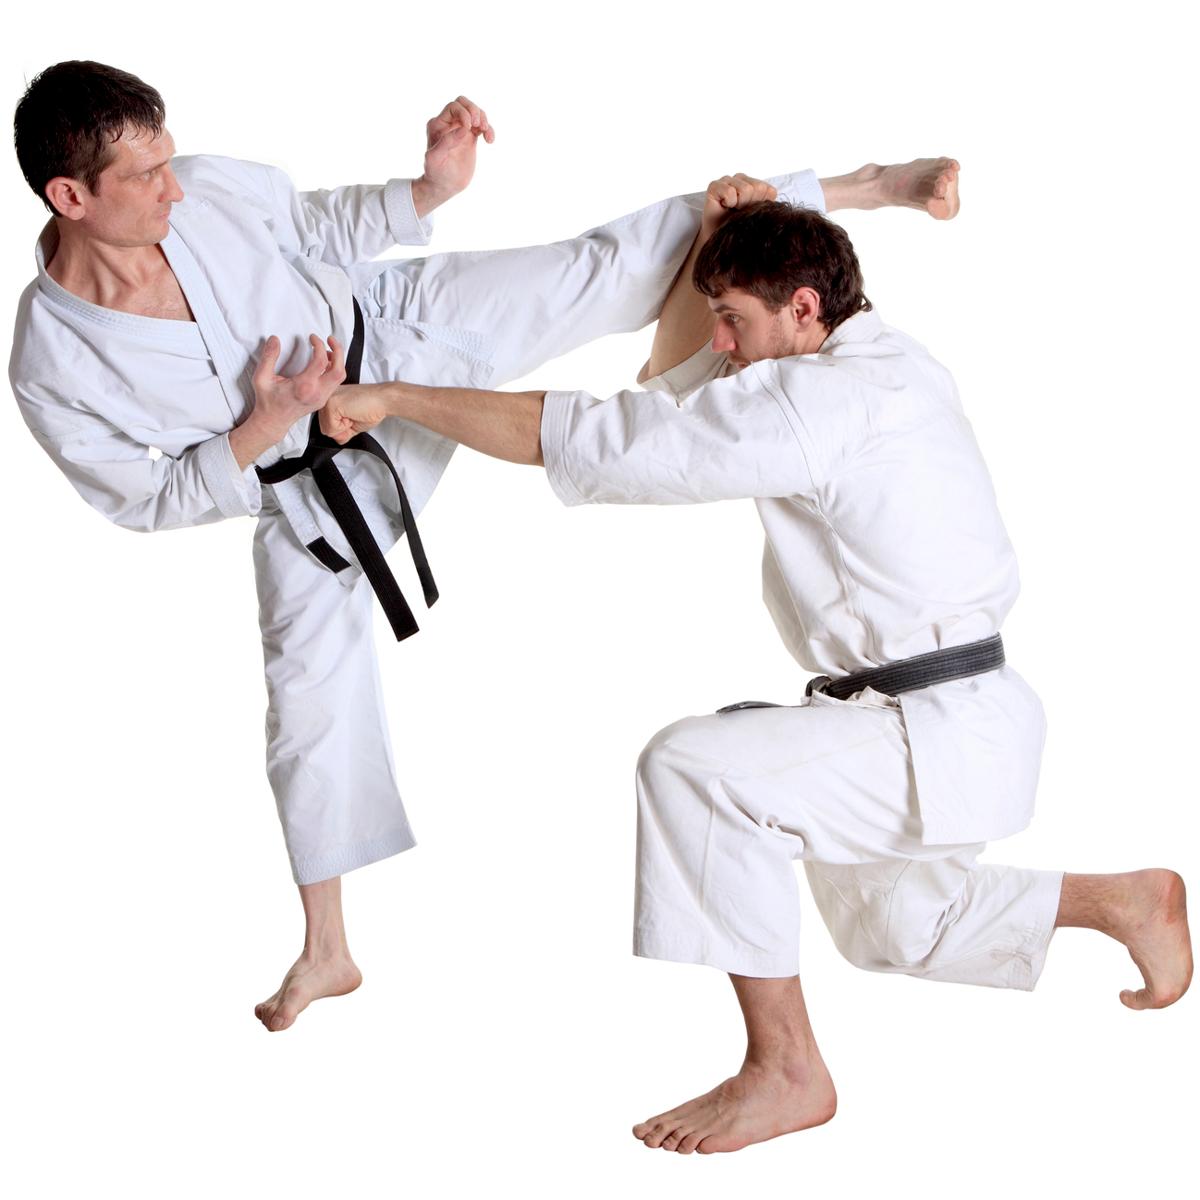 martial arts moves for self defense